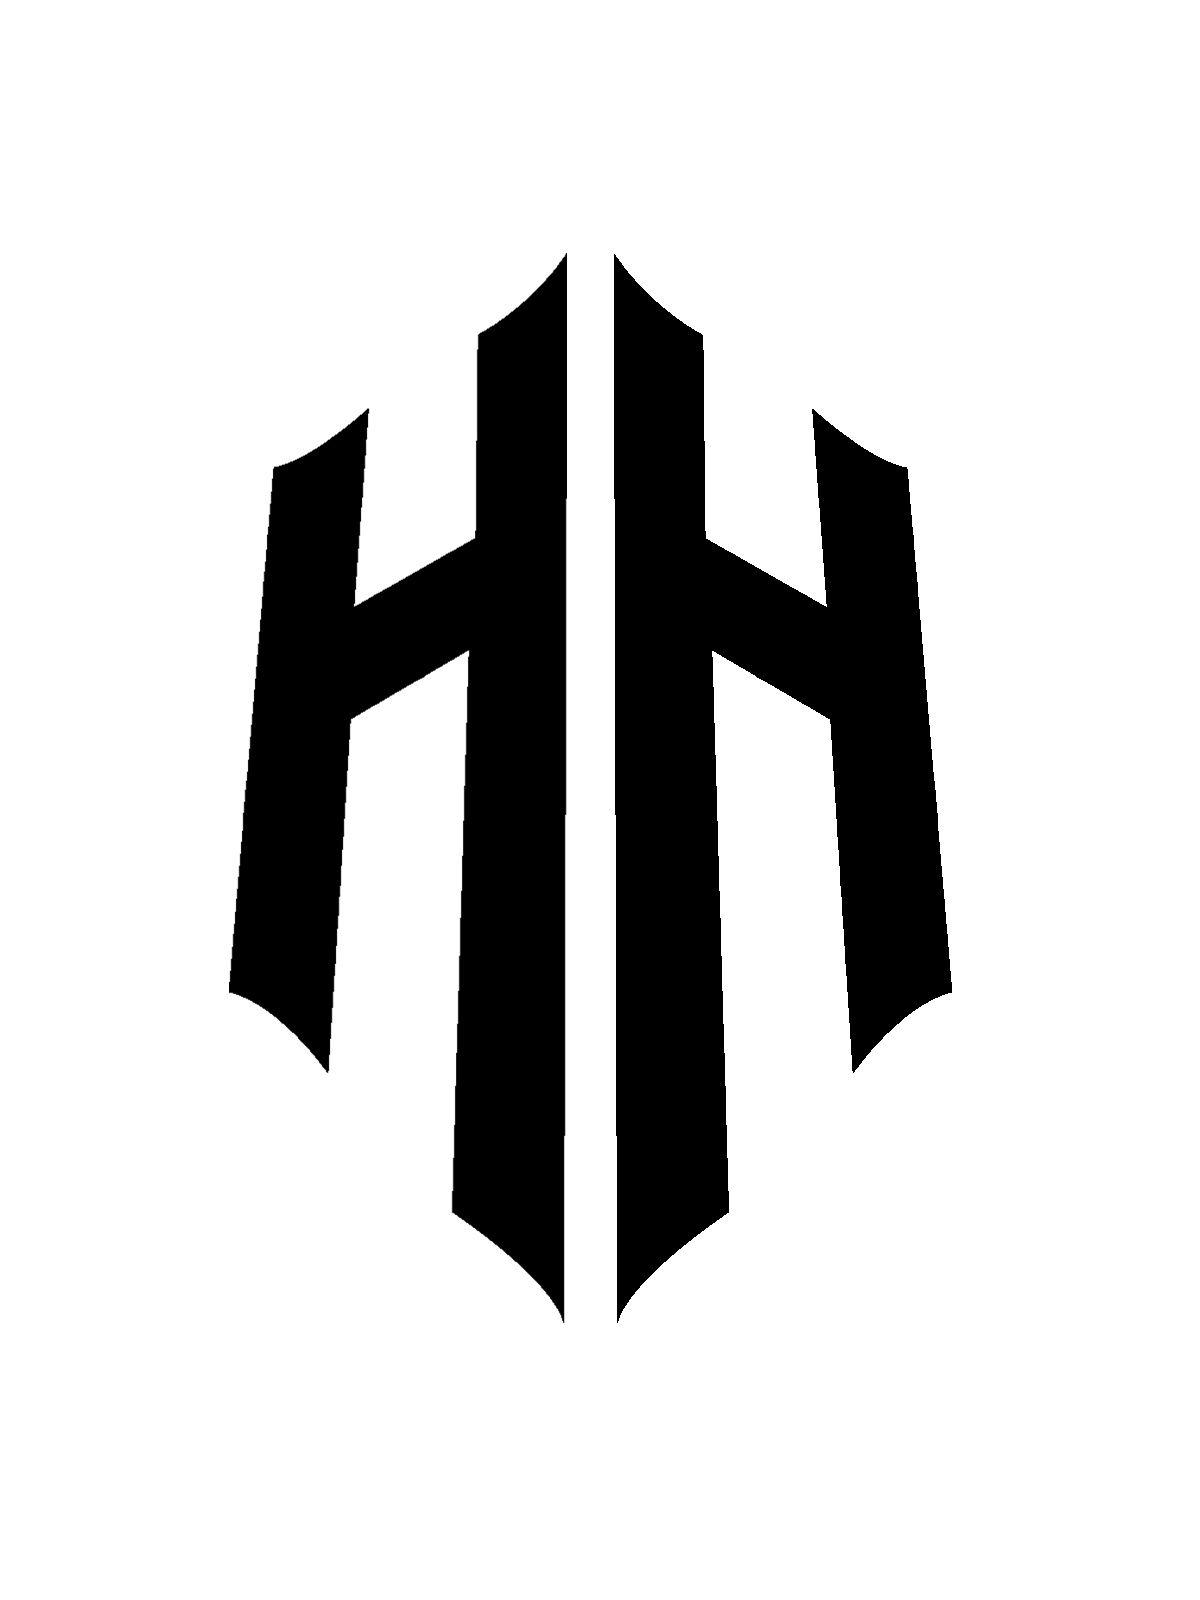 H H Logo - Hh Logos